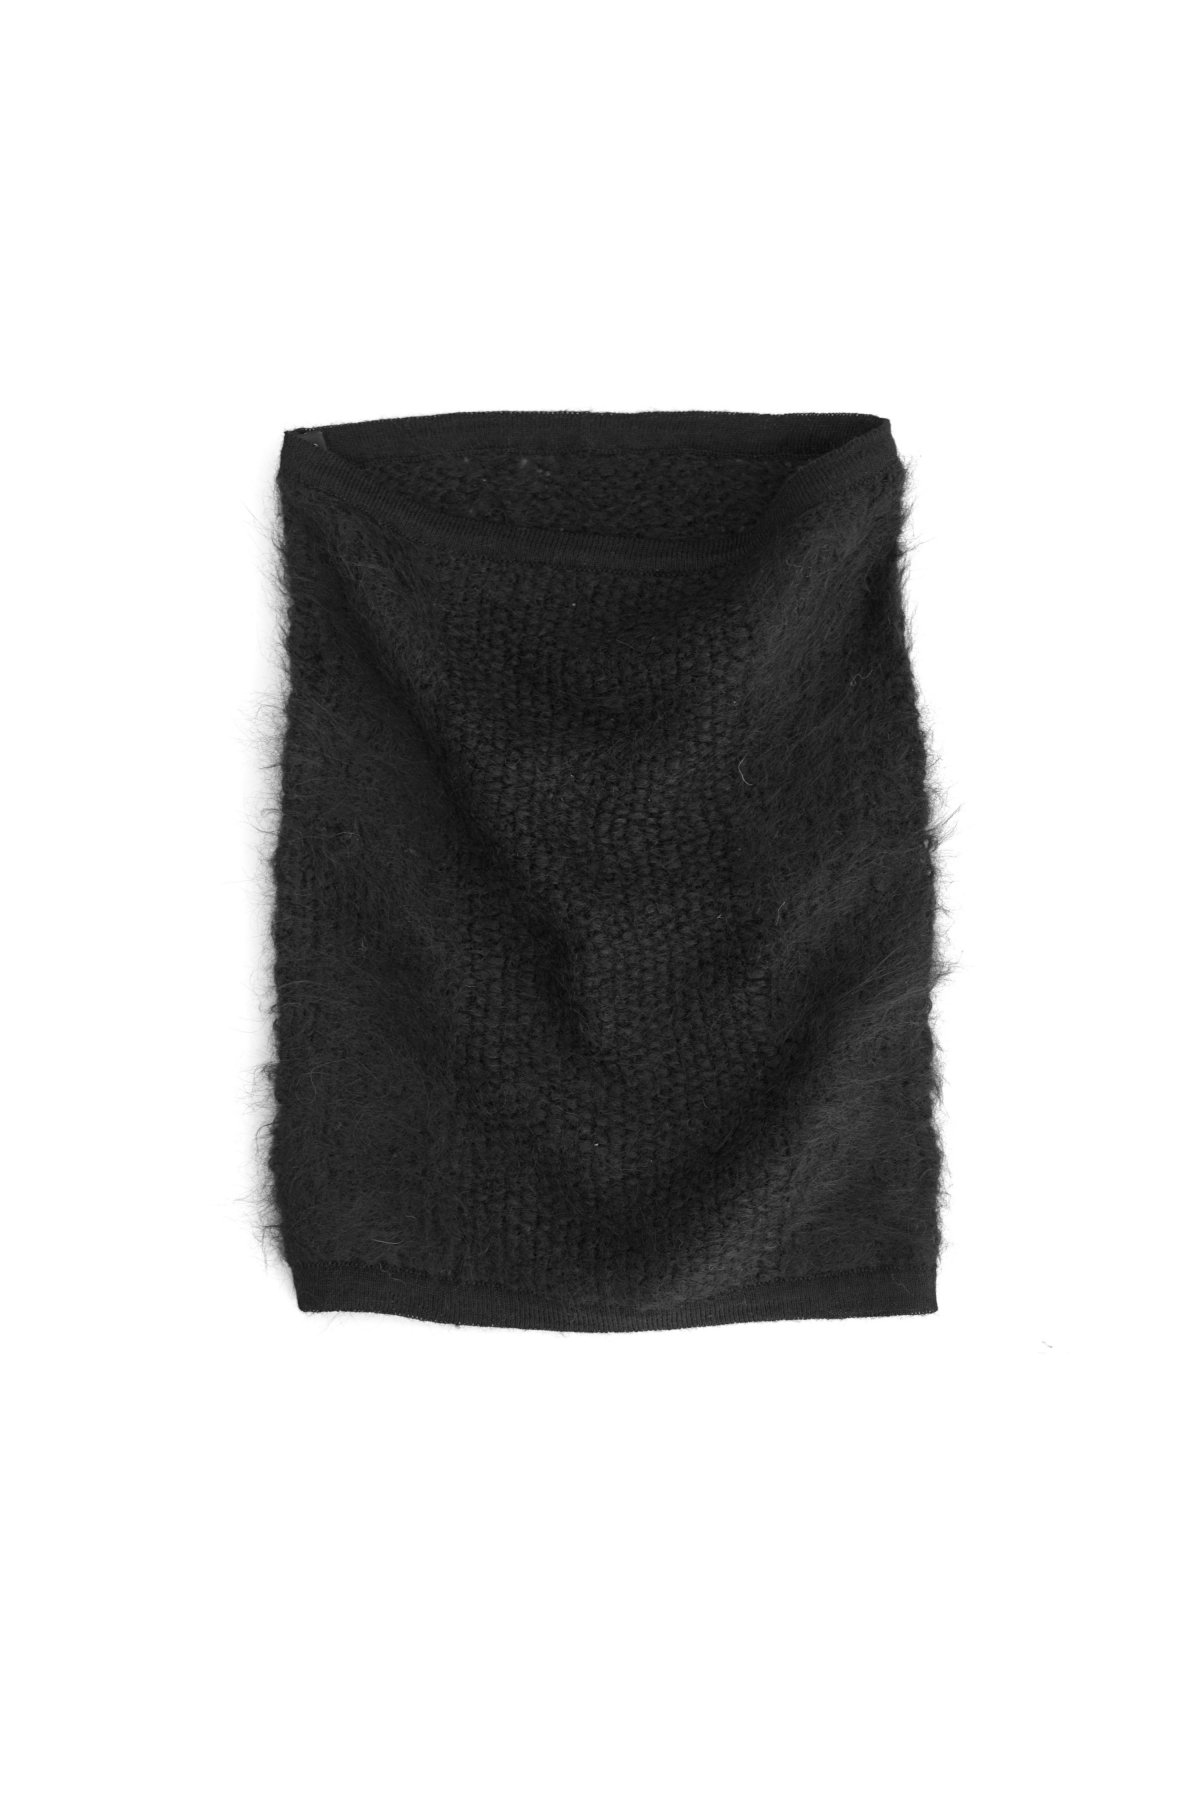 ACRONYM - NG5-PU / Hand-Knit Suri Alpaca Neck Gaiter